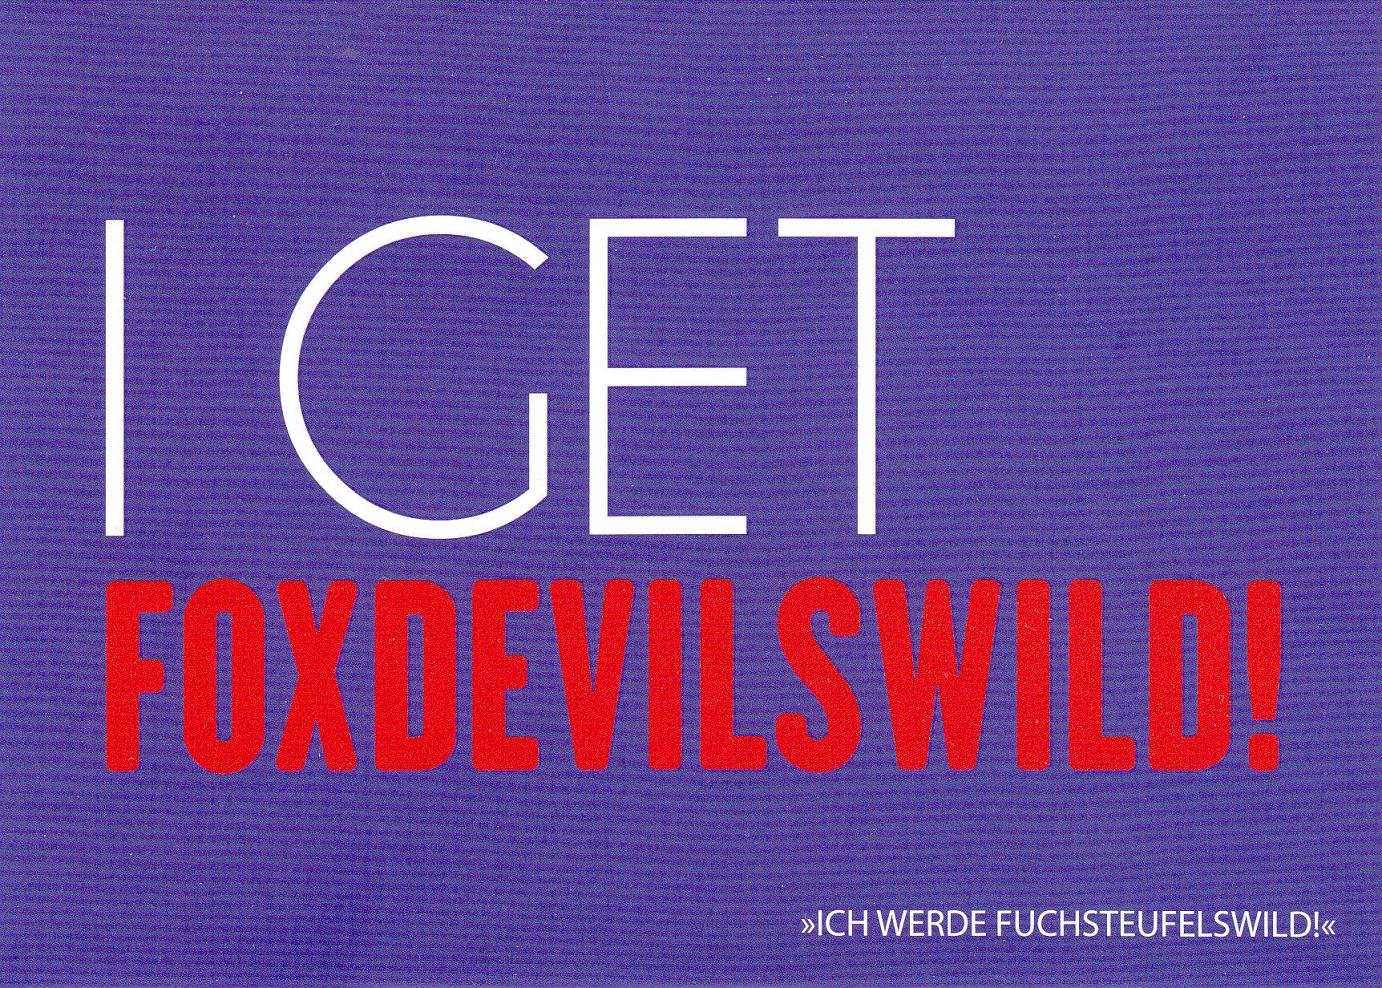 Foxdevilswild = Denglish